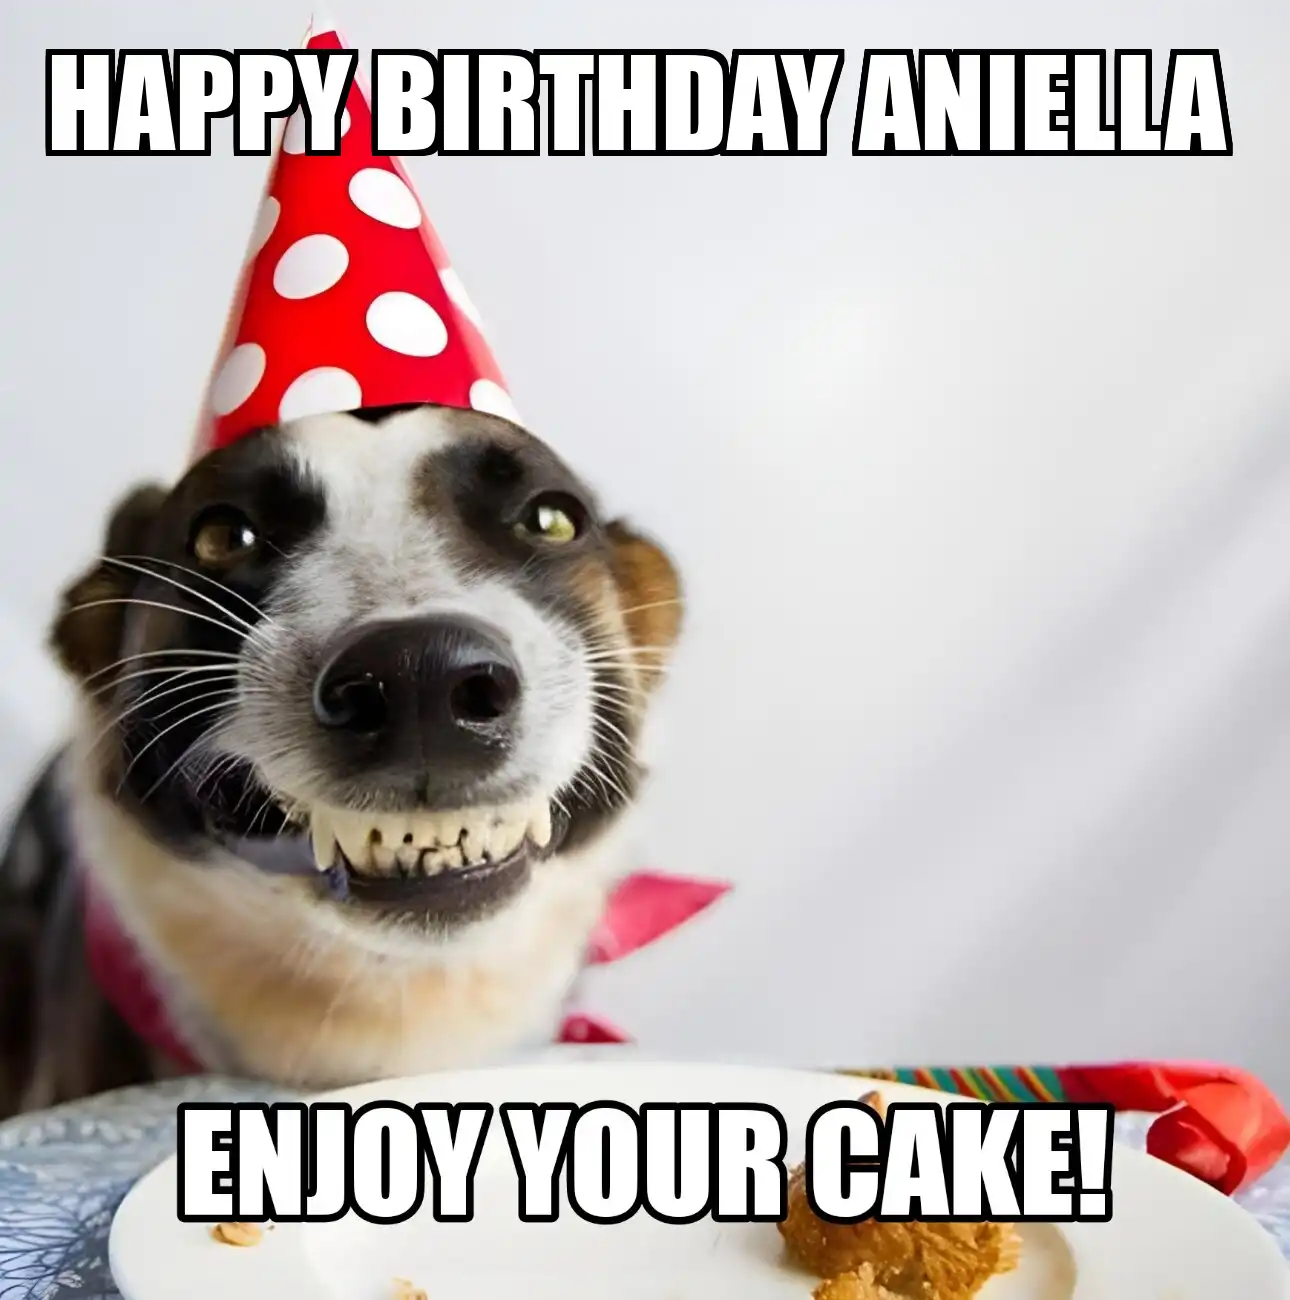 Happy Birthday Aniella Enjoy Your Cake Dog Meme